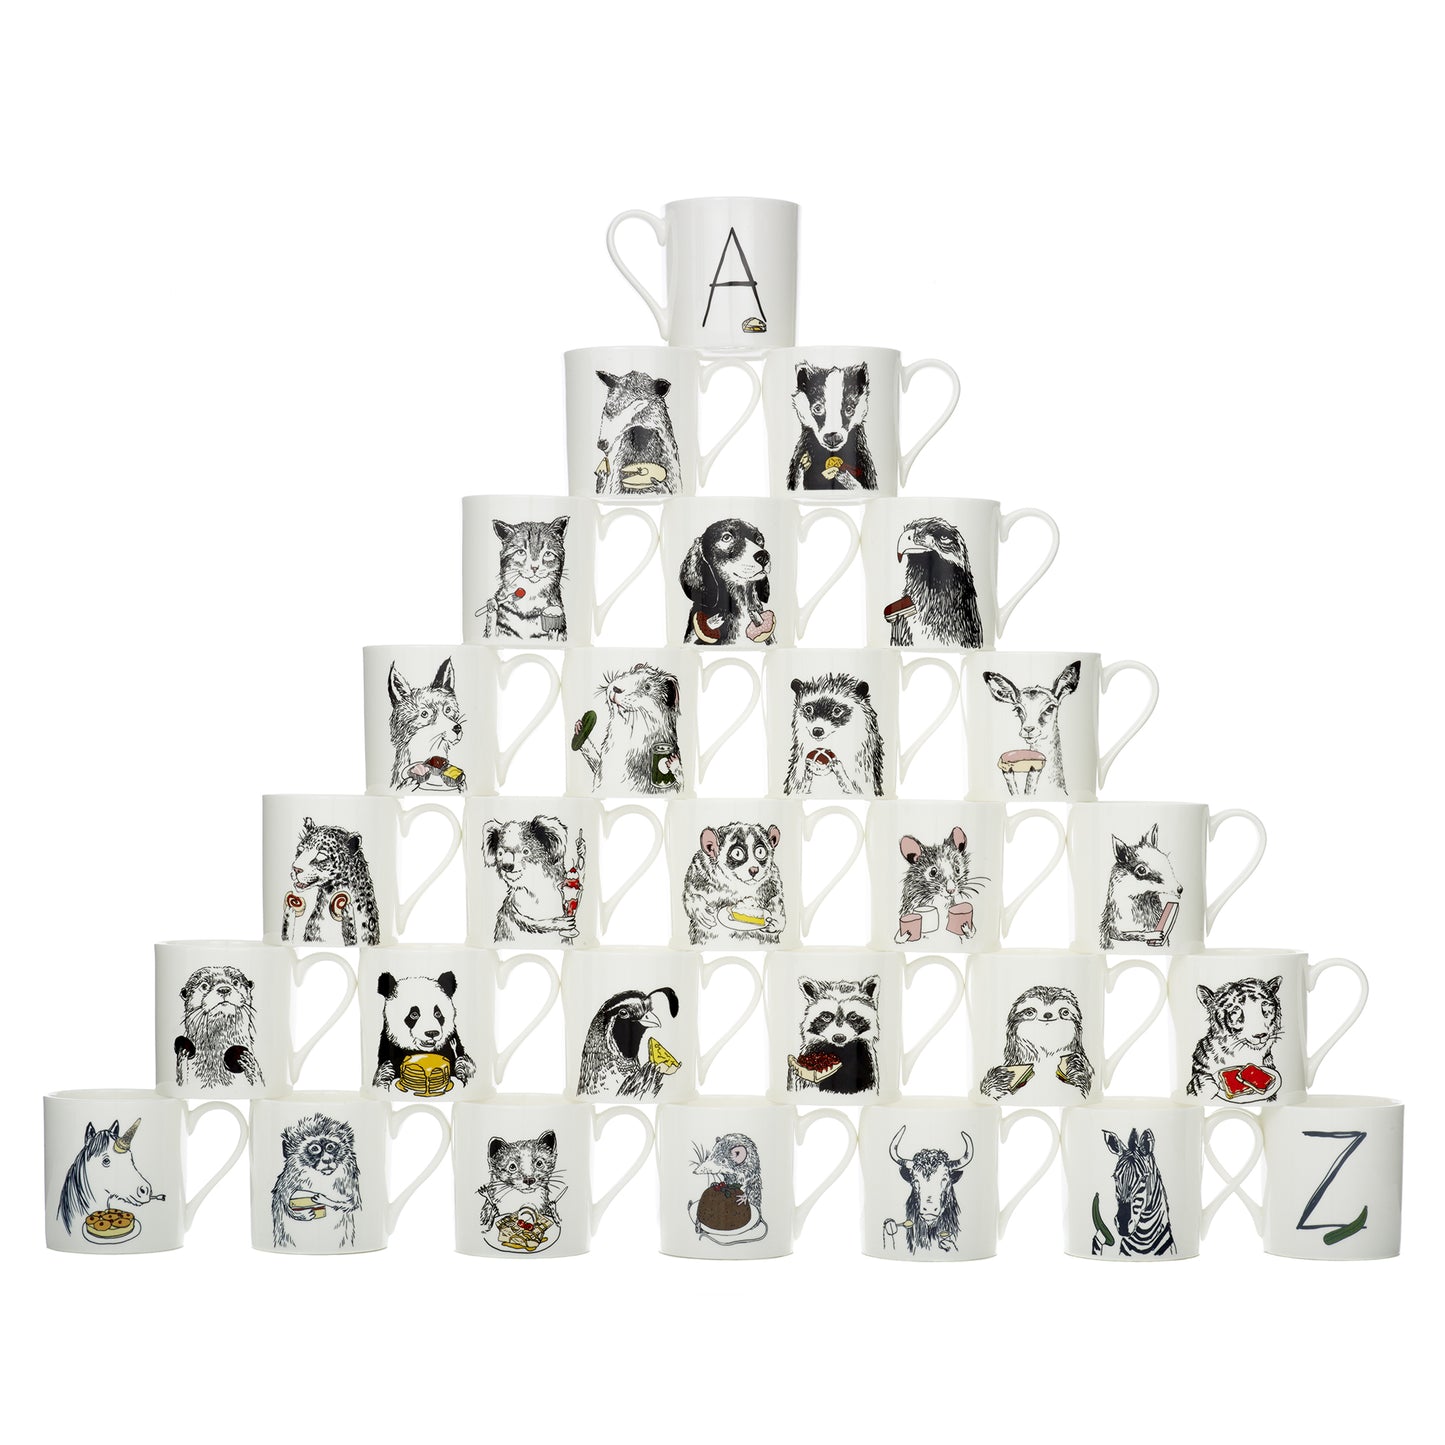 X - Alphabet of Snacking Animals Mug